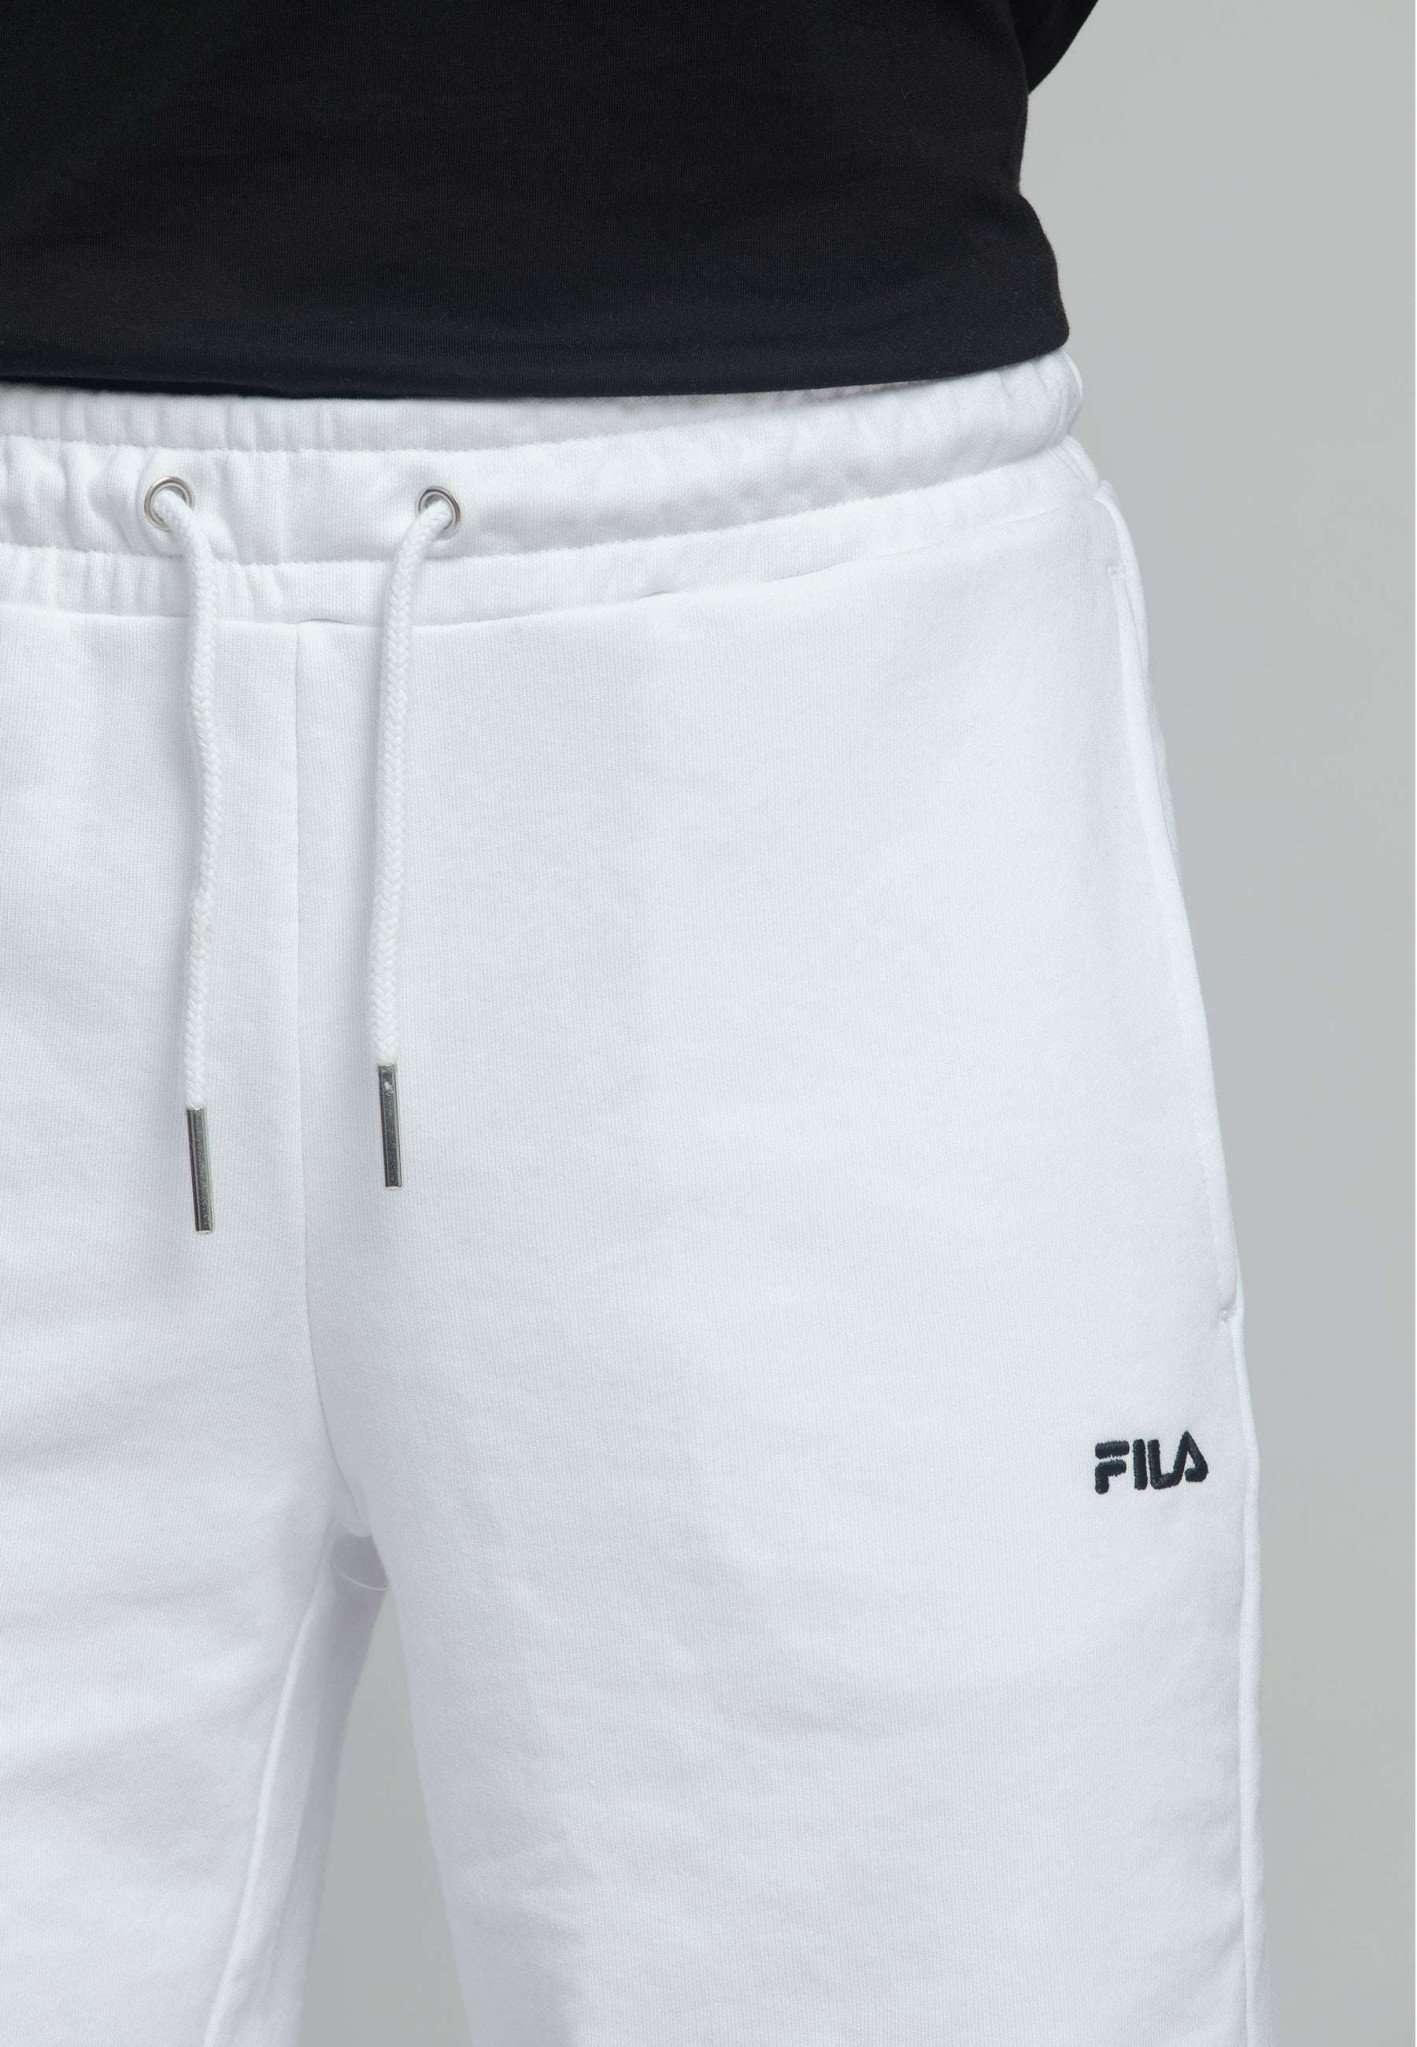 Blehen Sweat Shorts in Bright White Shorts Fila   